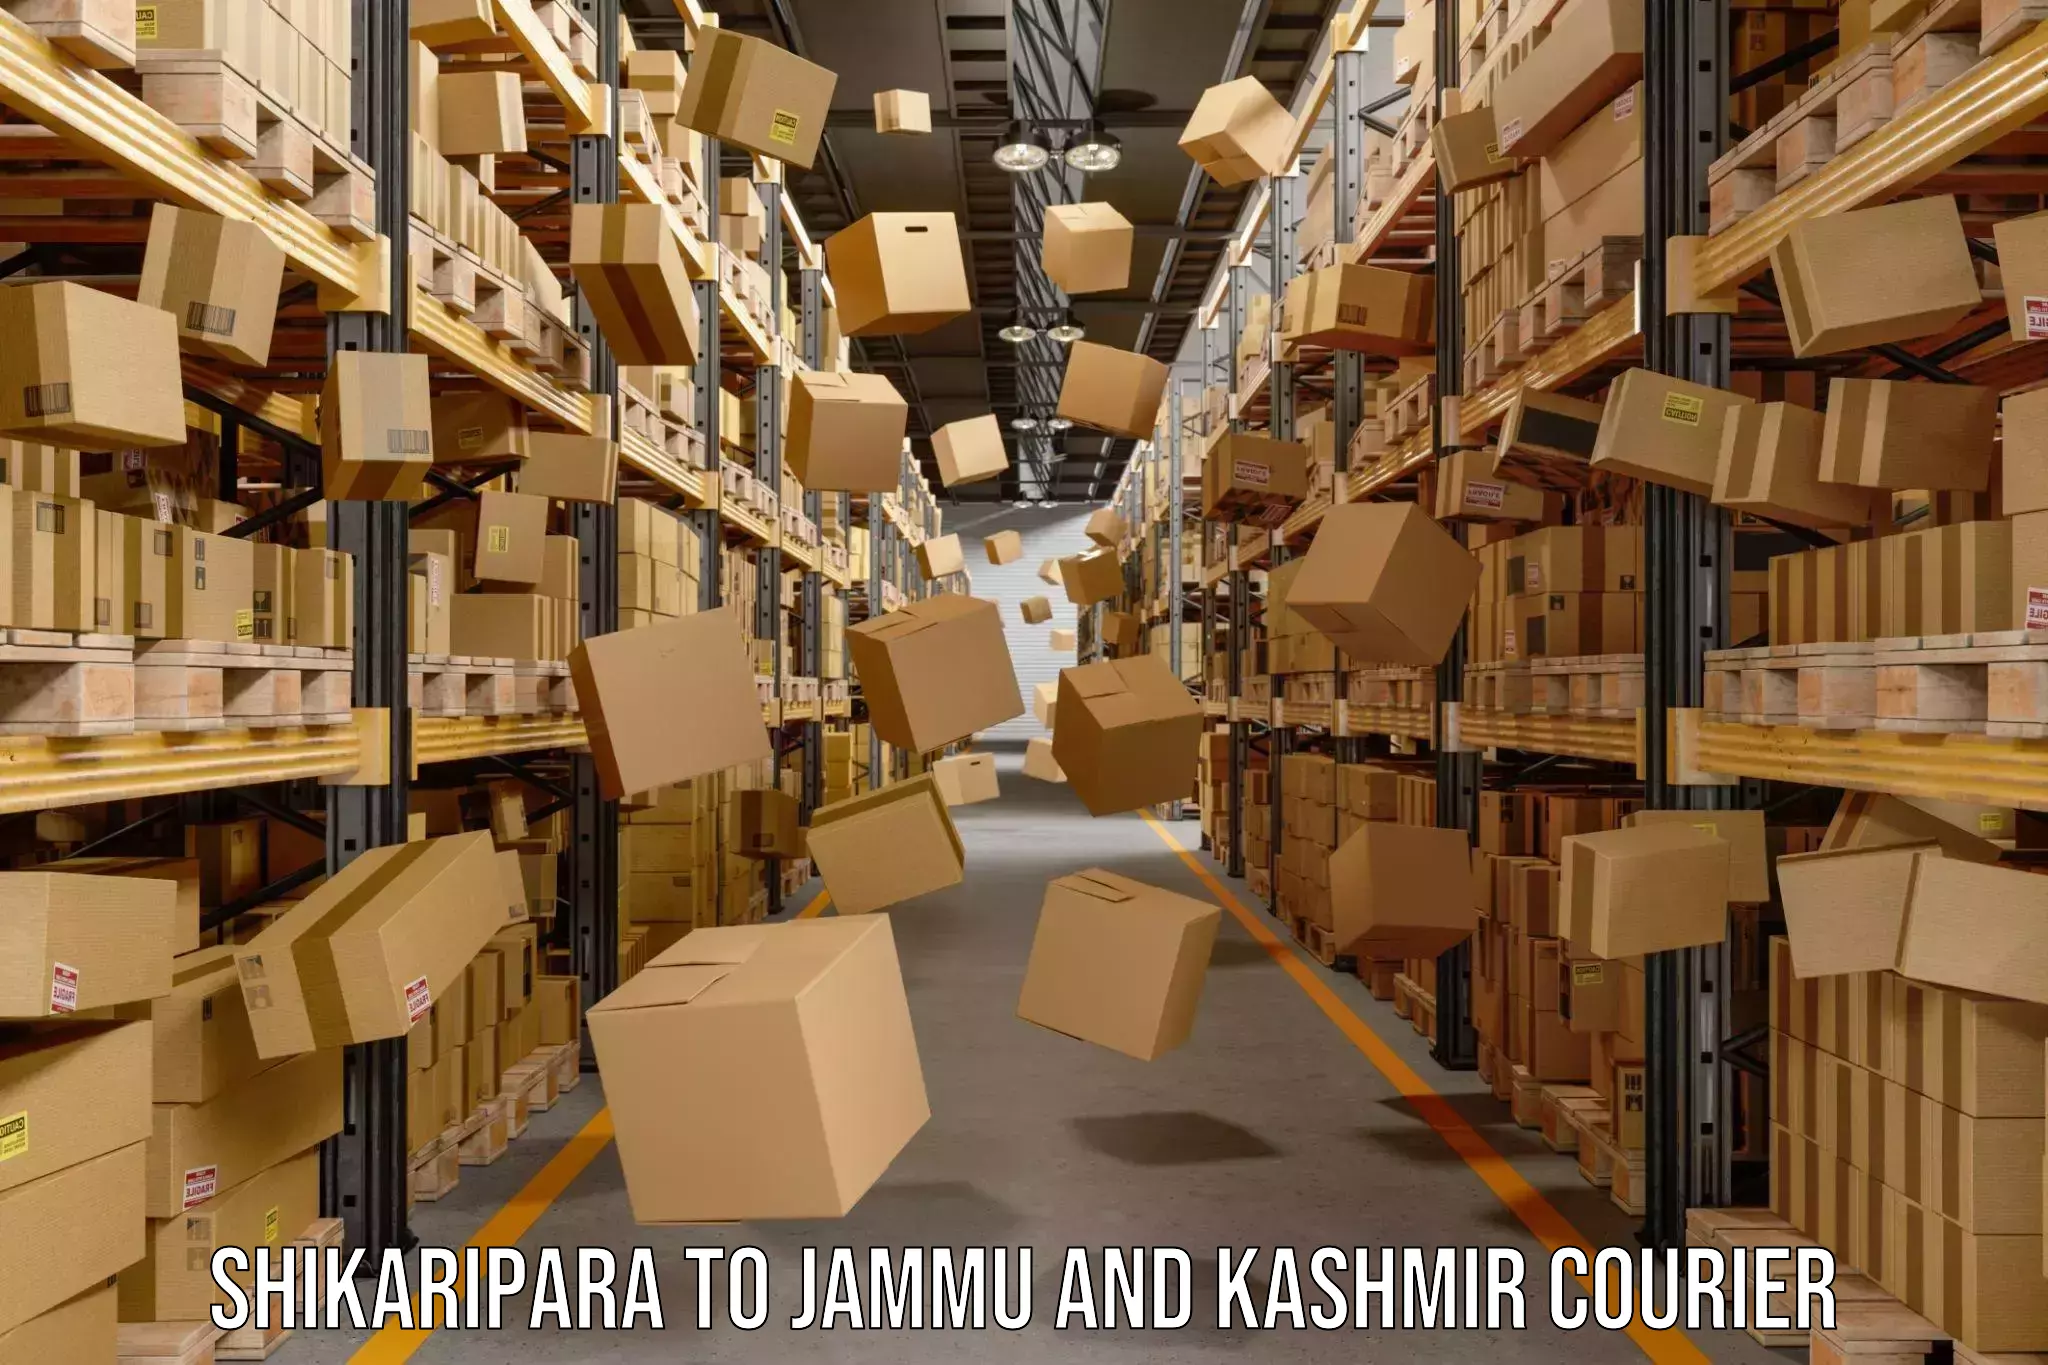 Courier service partnerships Shikaripara to Jammu and Kashmir